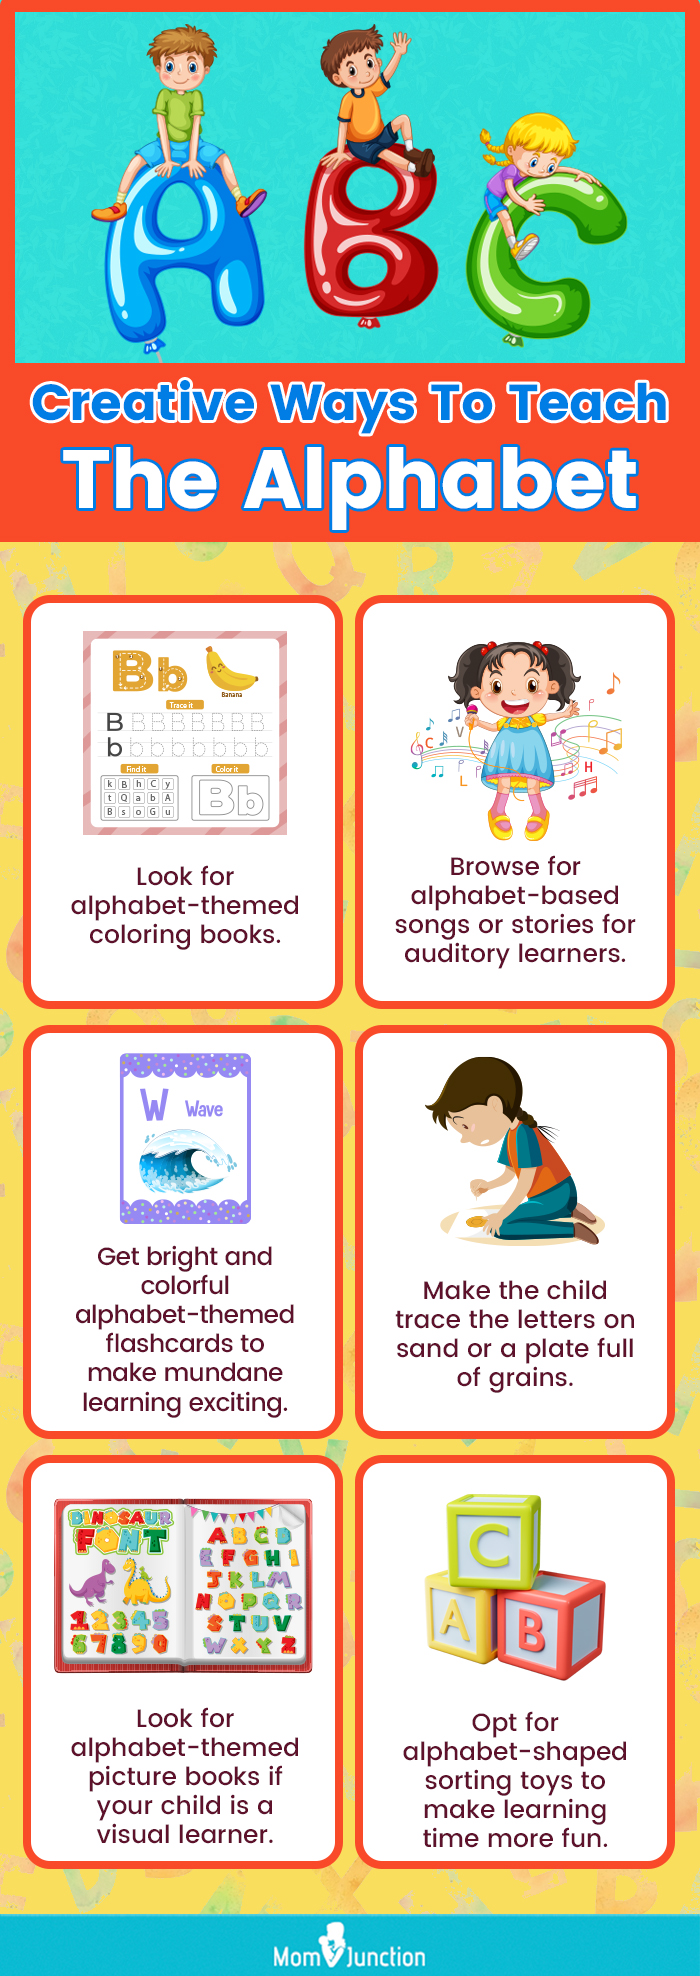 Creative Ways To Teach The Alphabet (infographic)